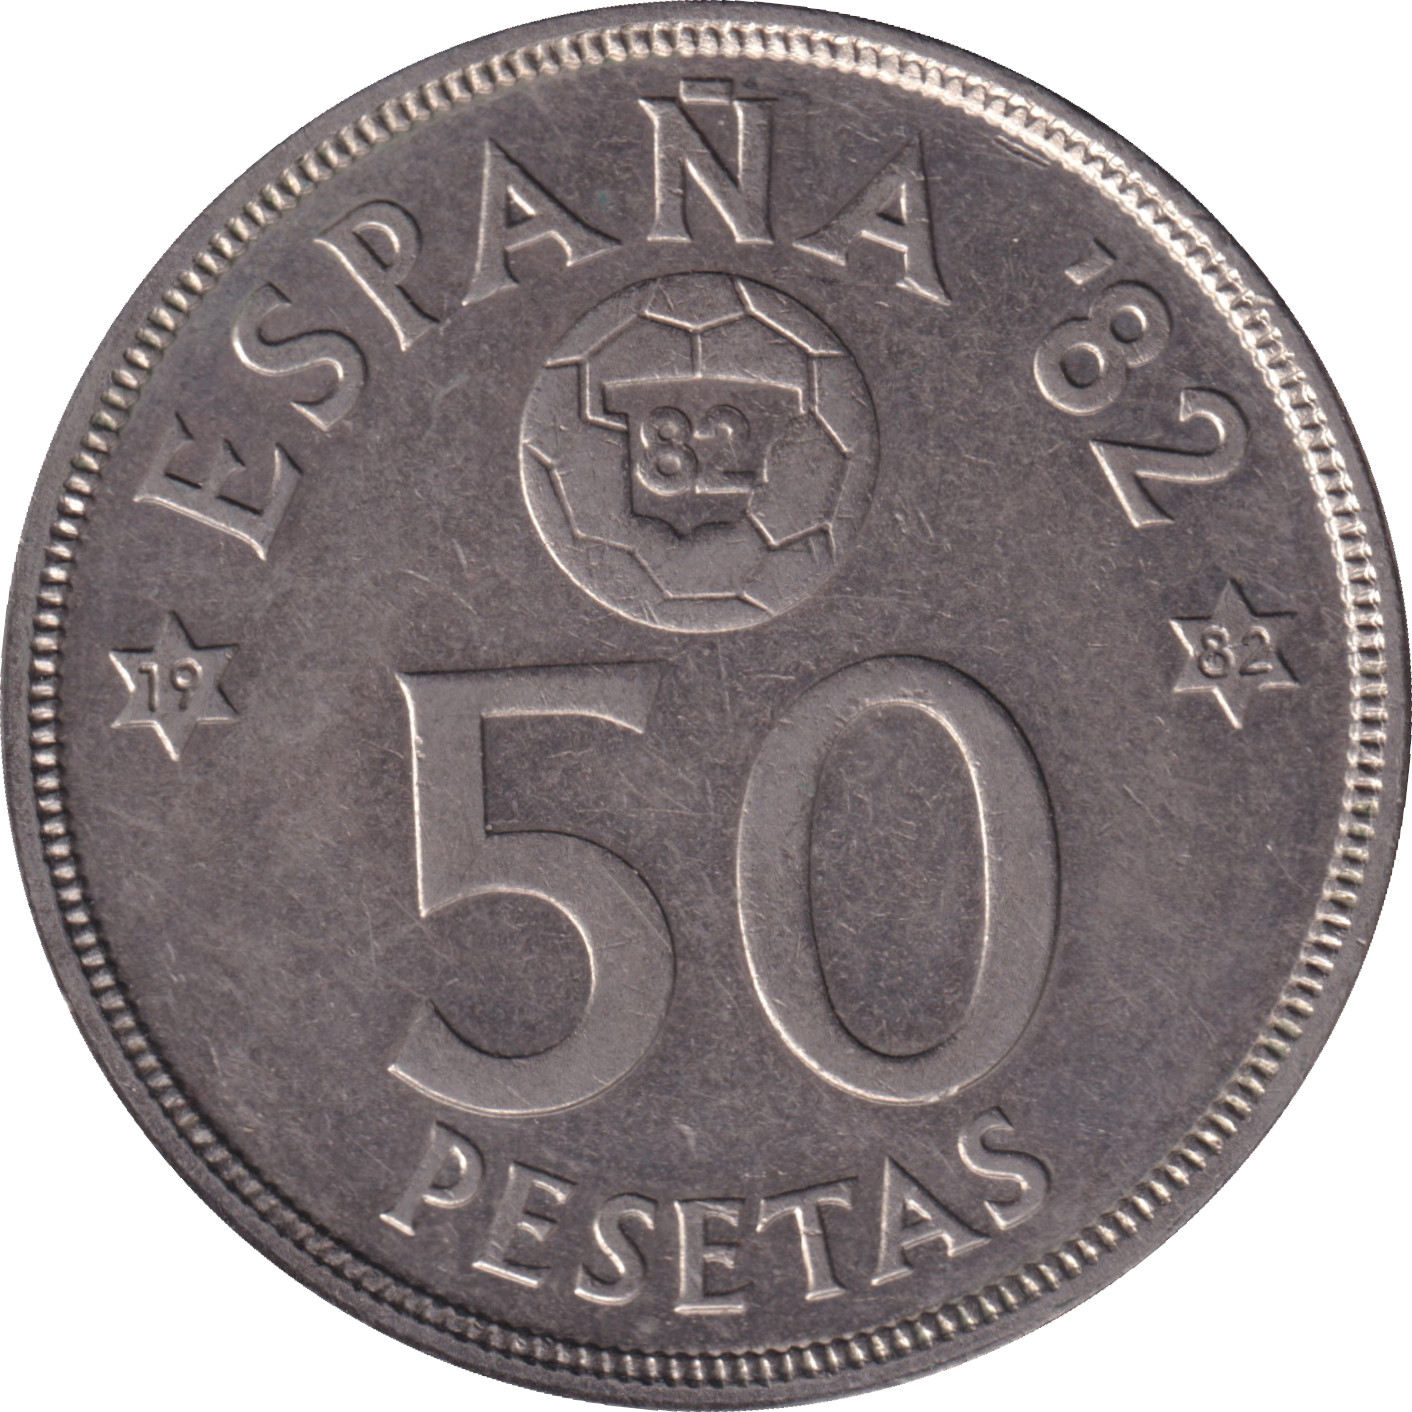 50 pesetas - Juan Carlos I - Coupe du Monde